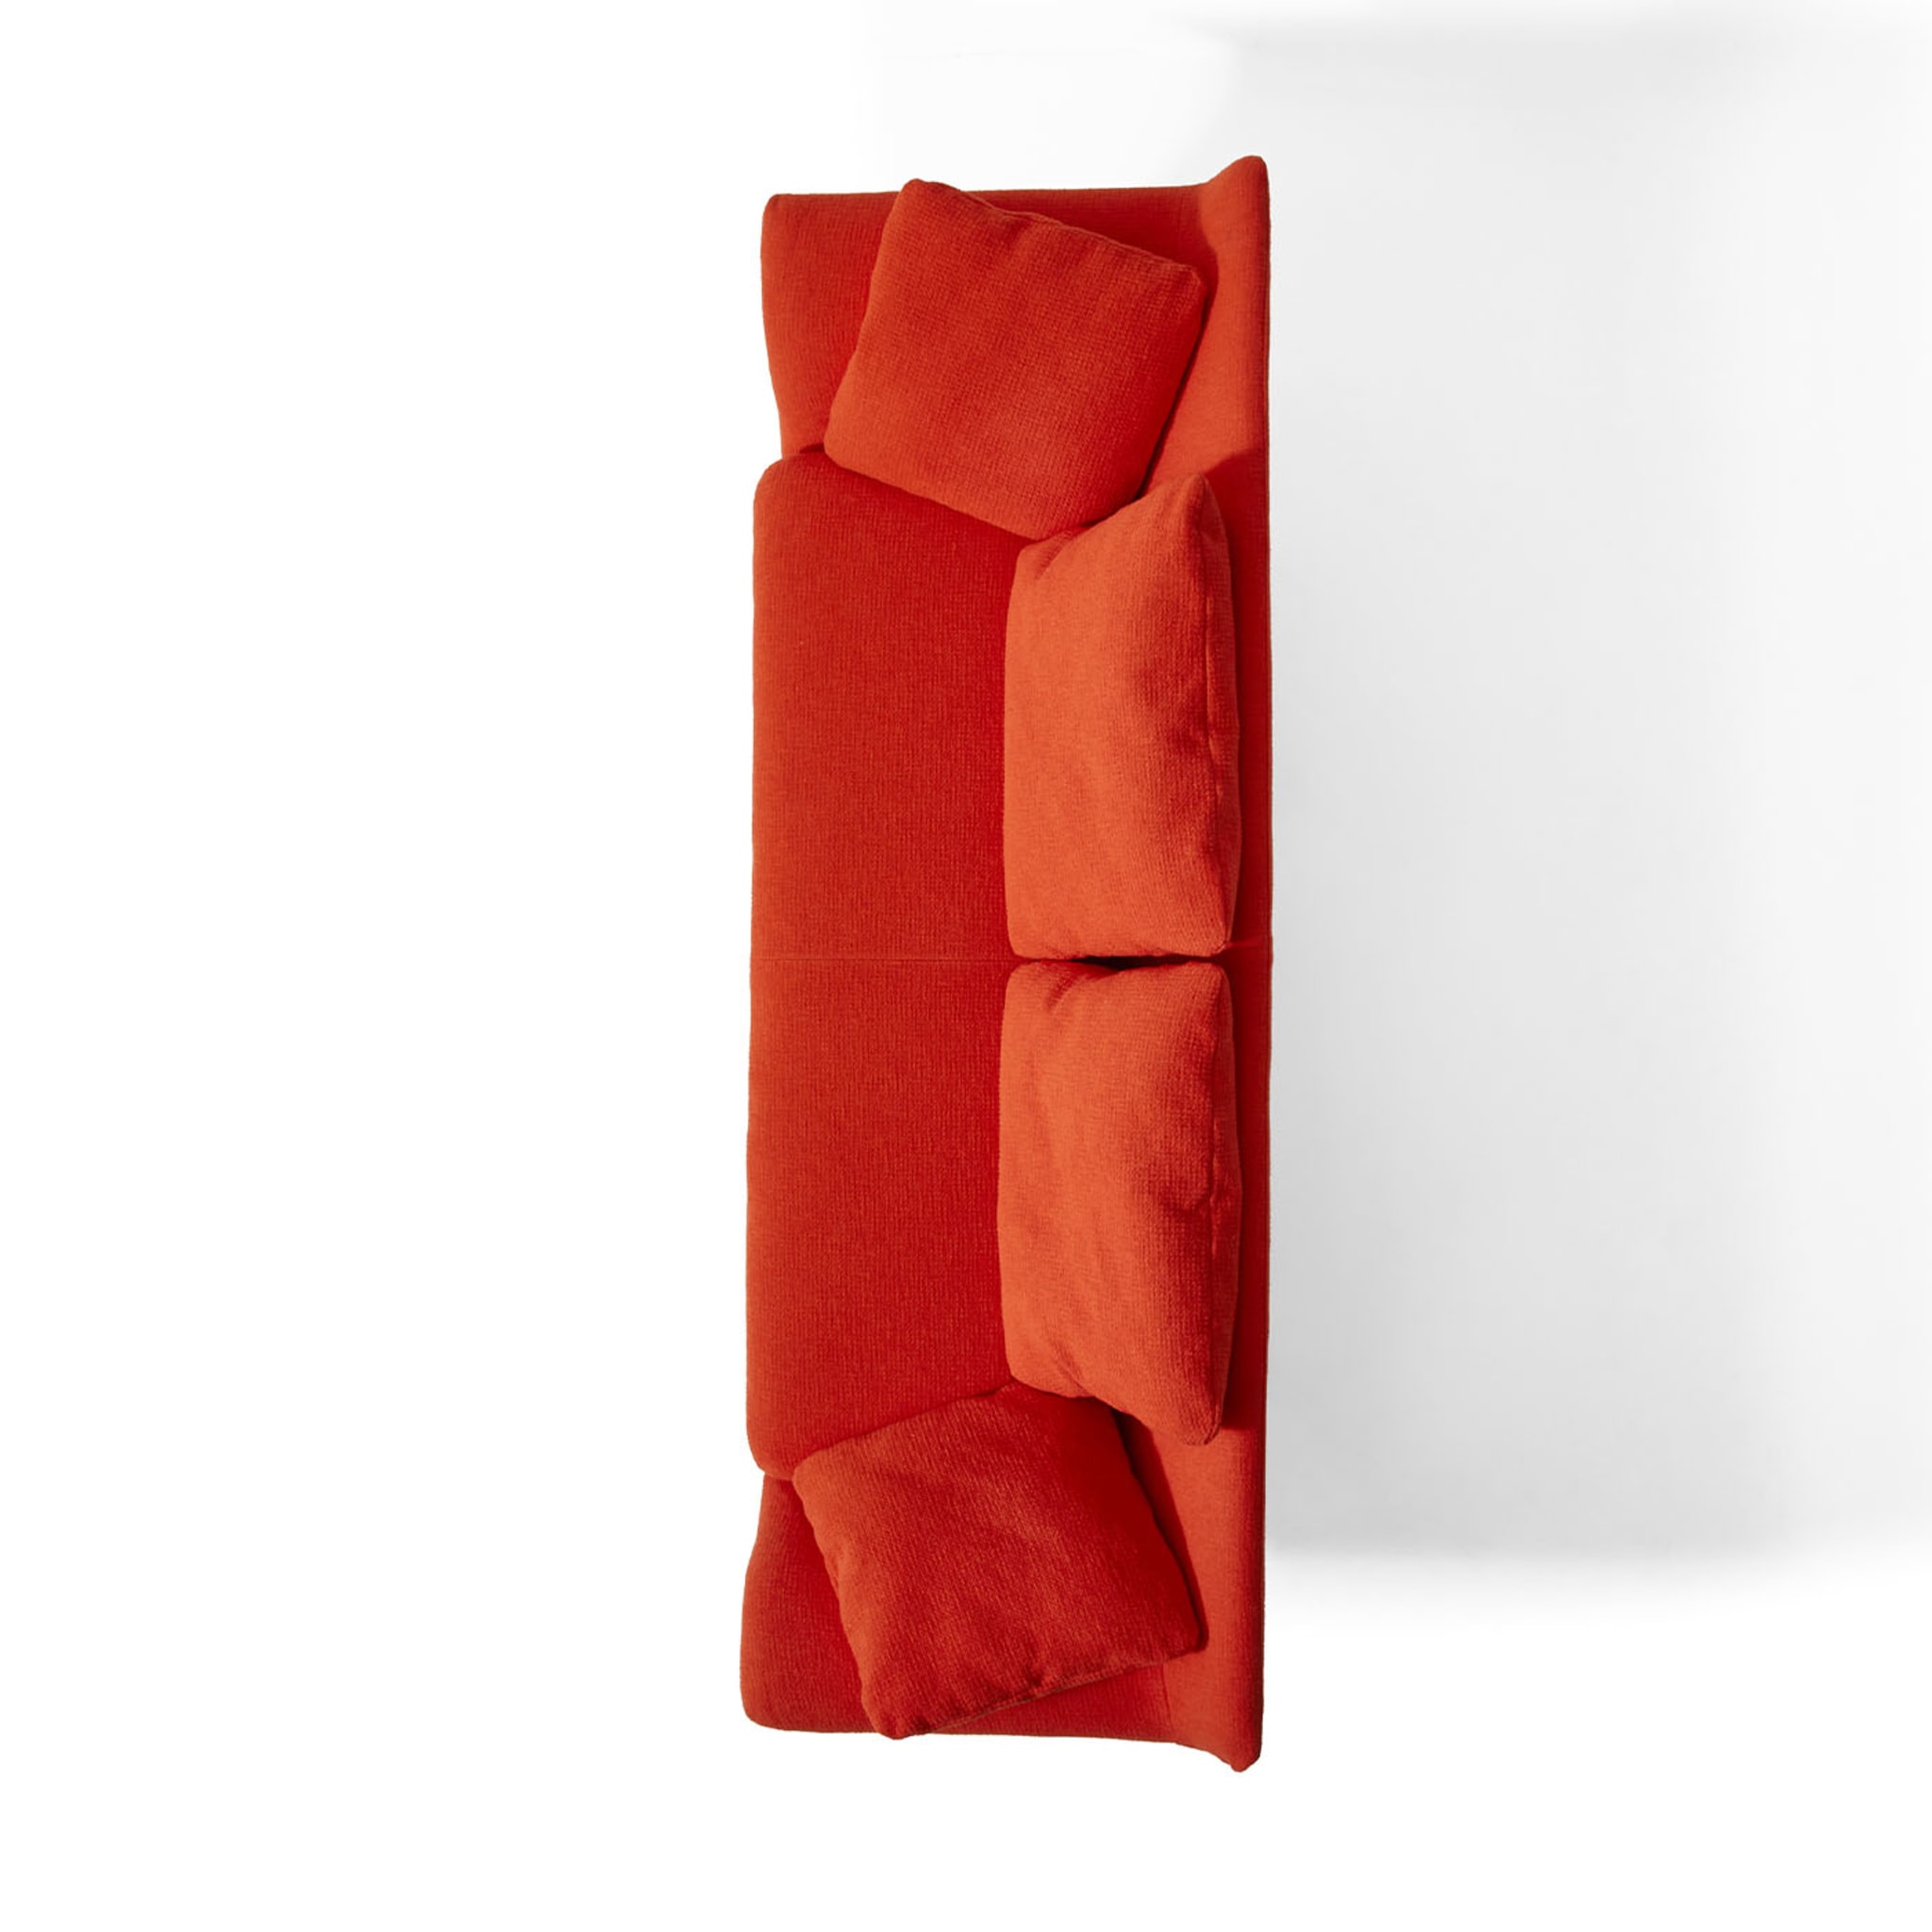 Esosoft 3-Seater Orange Sofa by Antonio Citterio - Alternative view 2